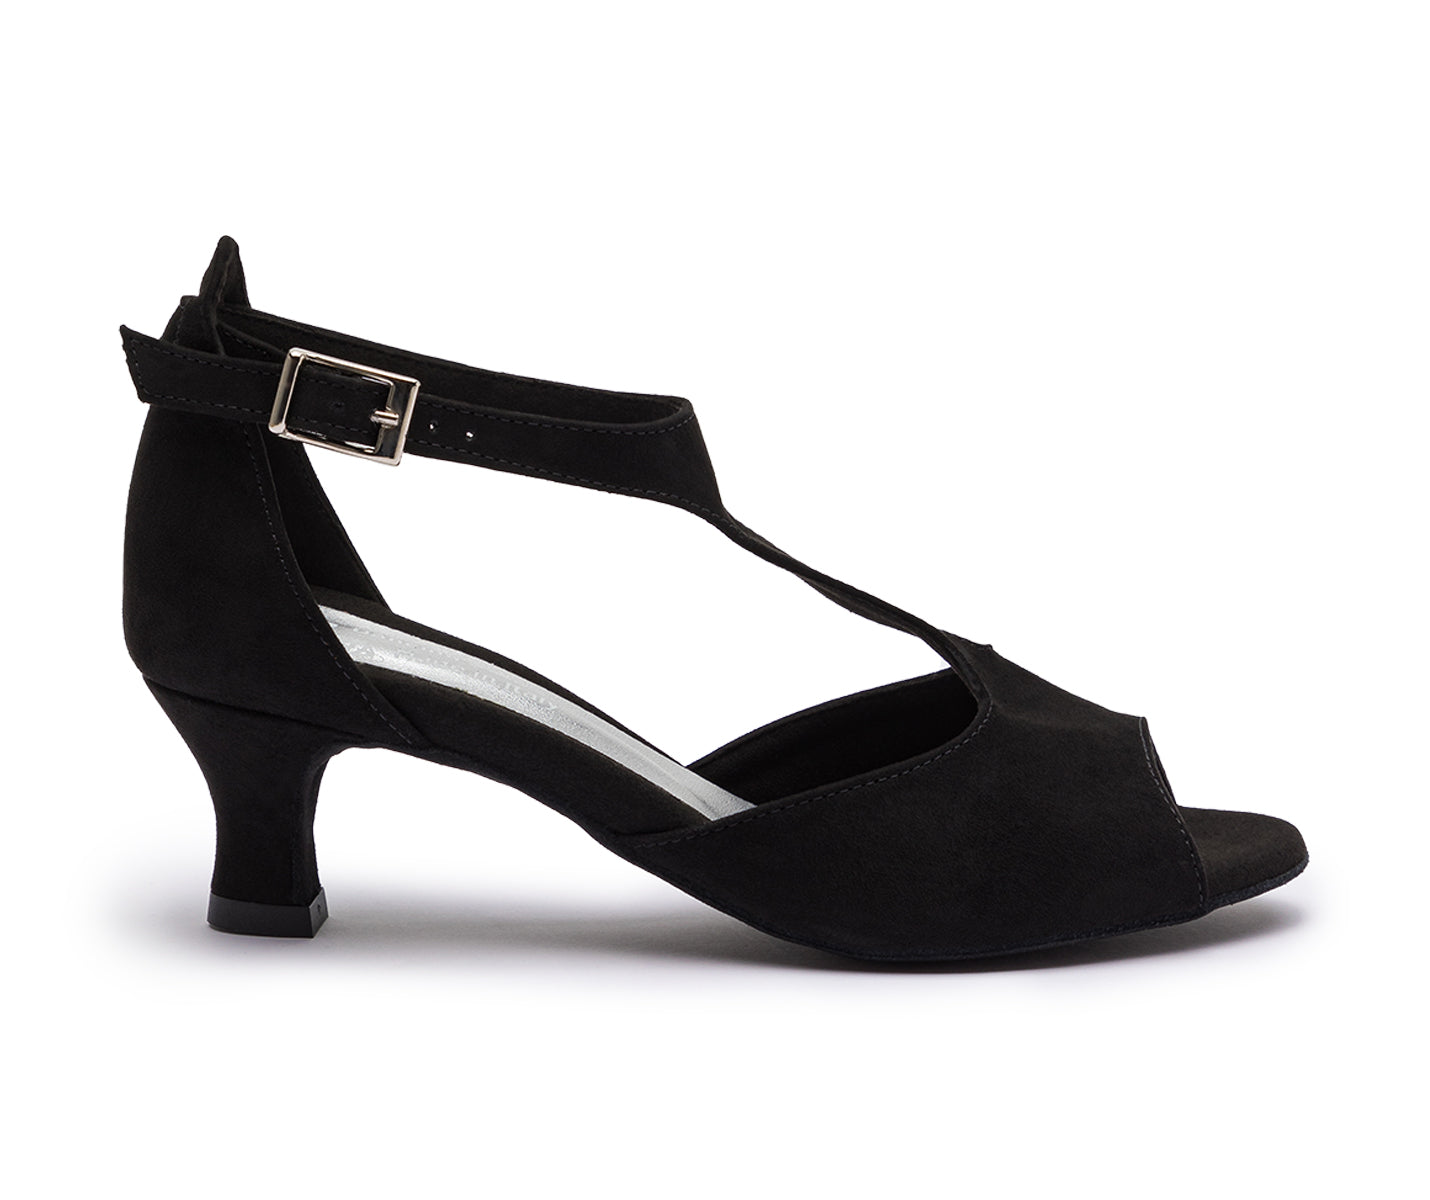 DQ1001 zapatos de baile en negro con suela de gamuza